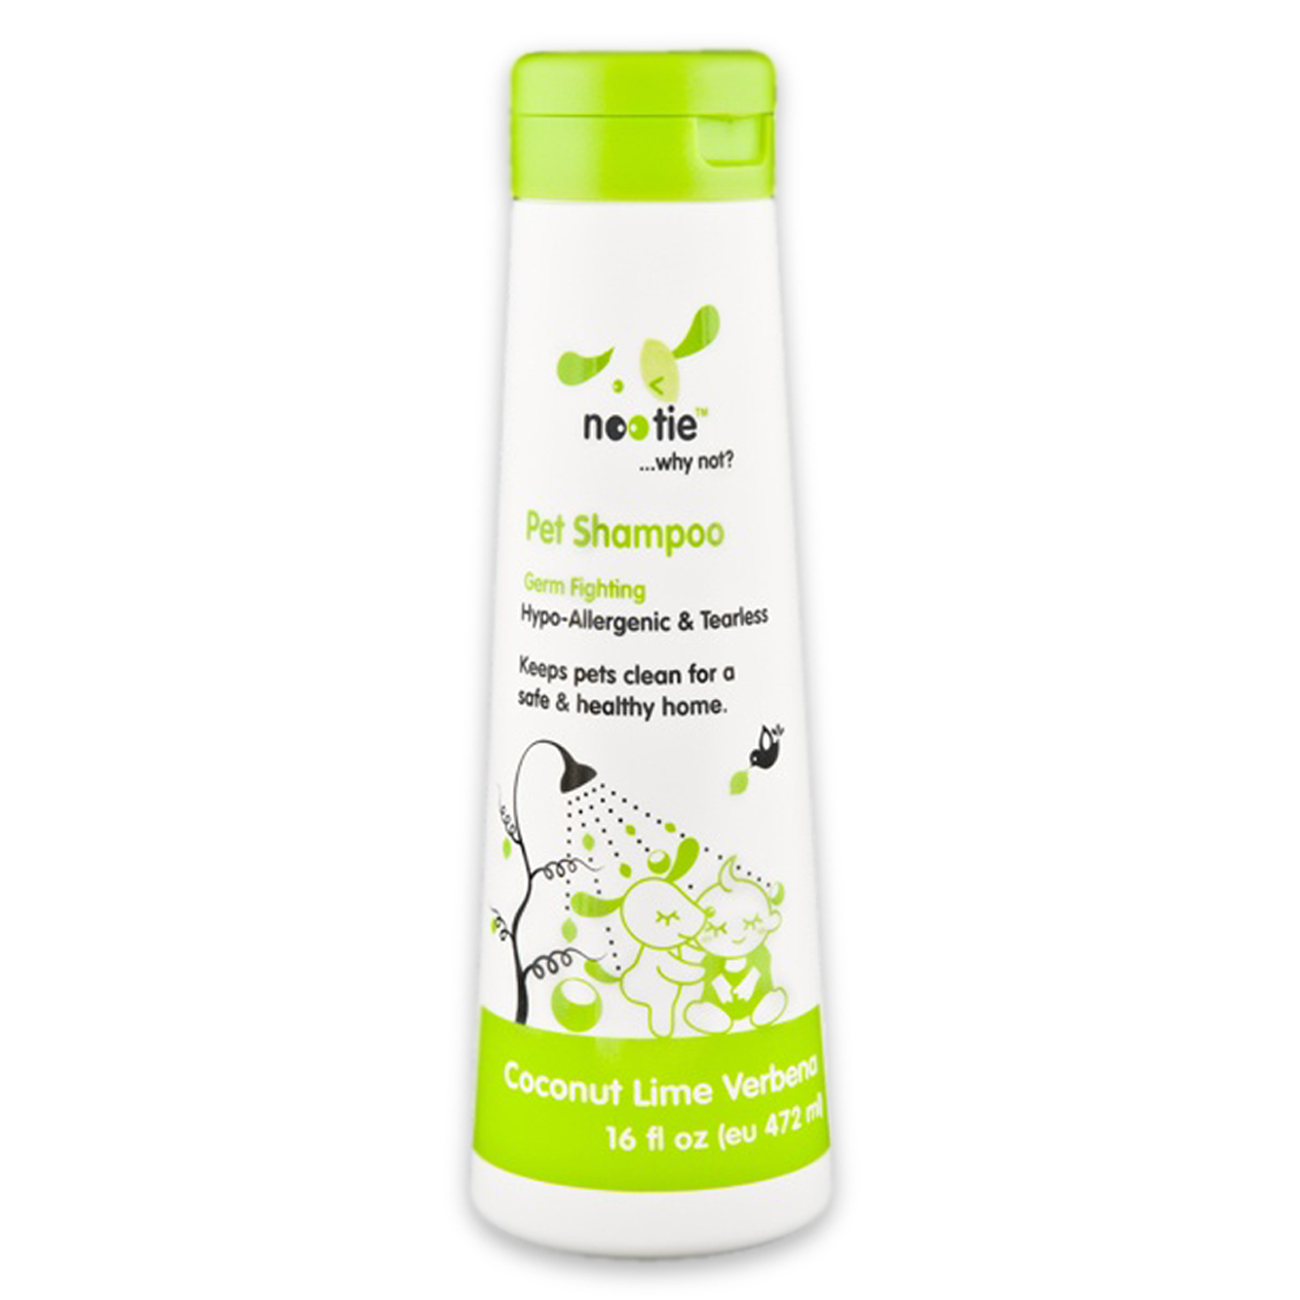 Nootie Hypo-Allergenic & Tearless Shampoo, Coconut Lime Verbena, 16 oz.